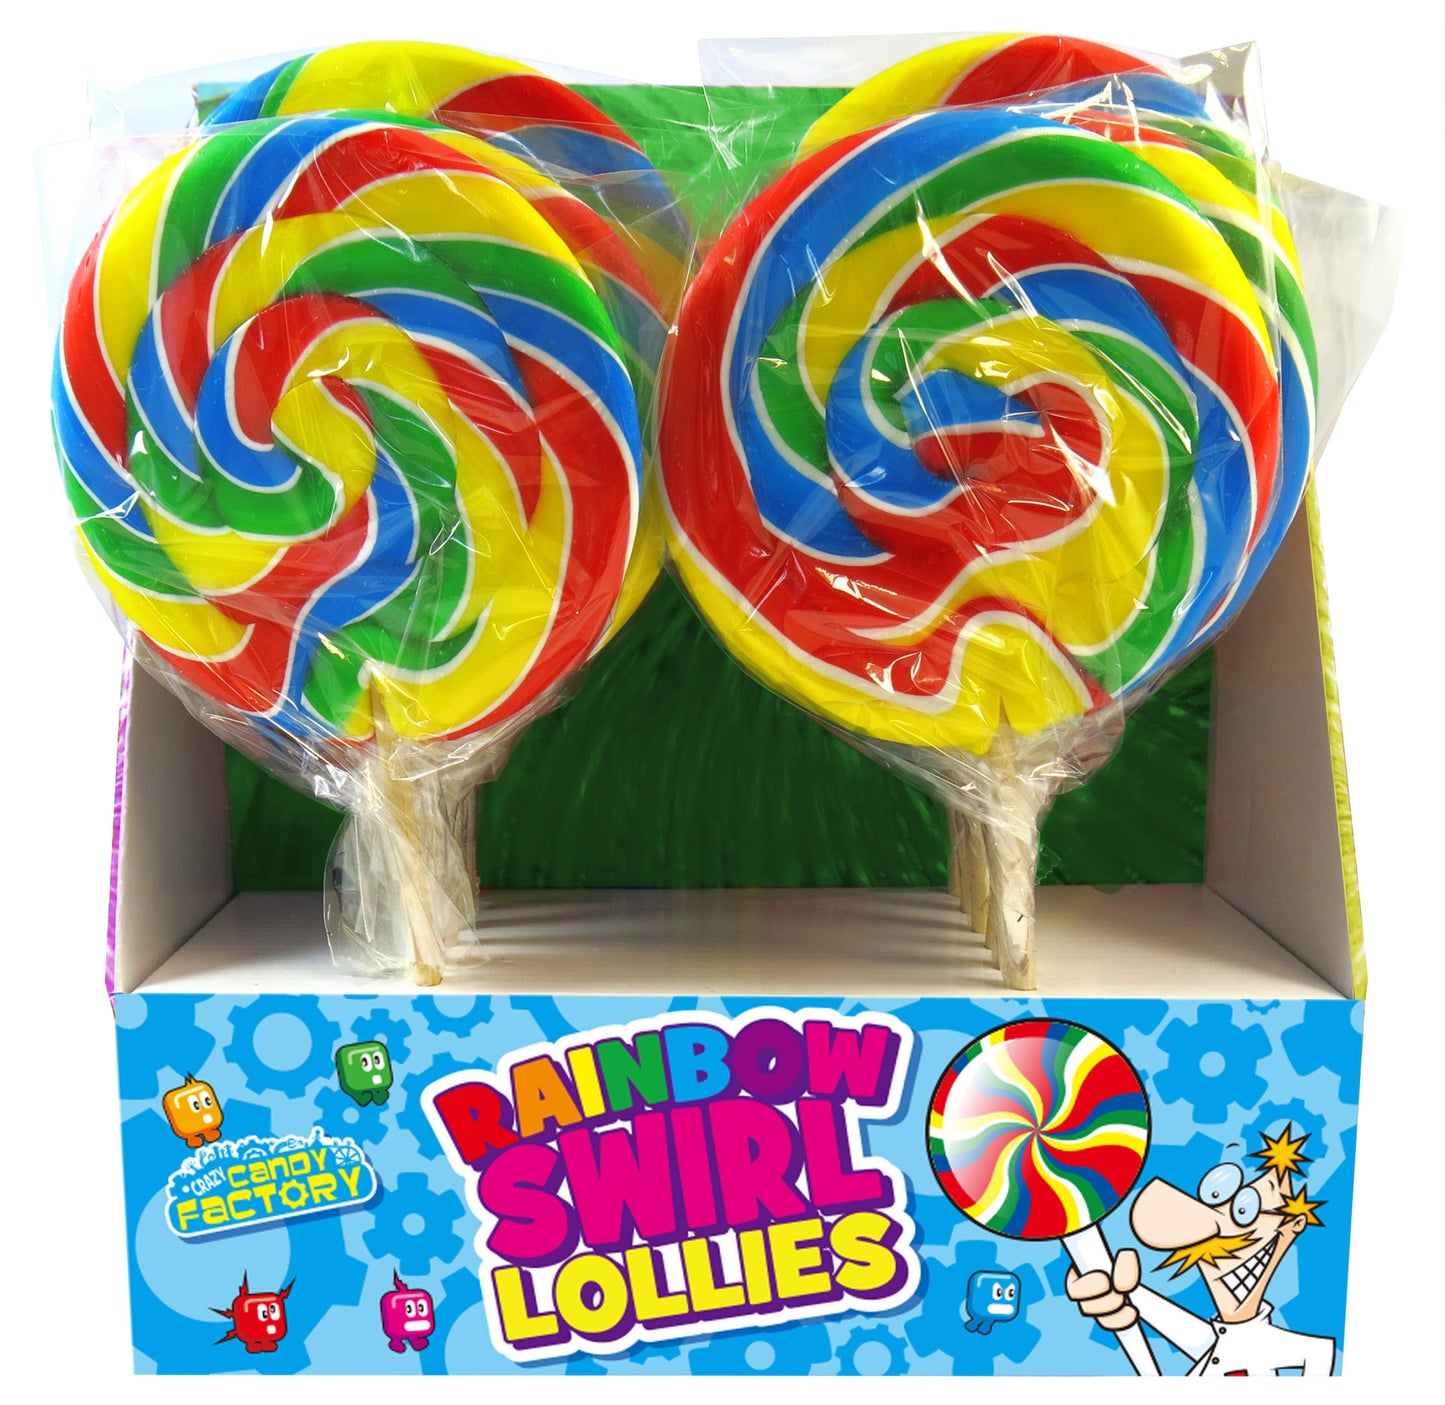 Crazy Candy Factory Rainbow Swirl Lollipops 55g